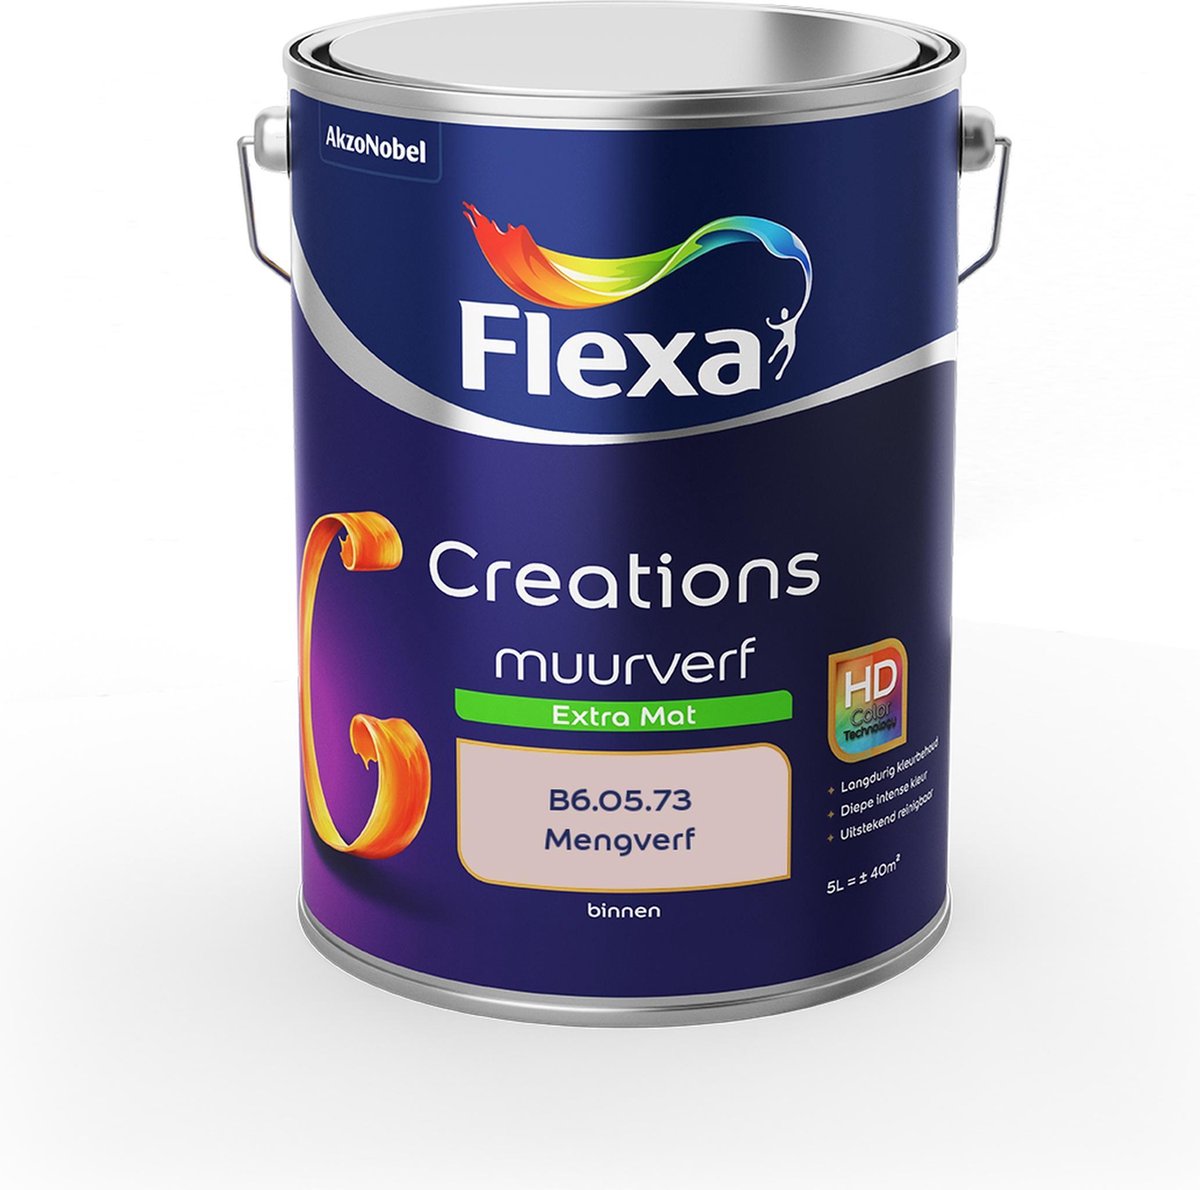 Flexa Creations Muurverf - Extra Mat - Colorfutures 2019 - B6.05.73 - 5 liter